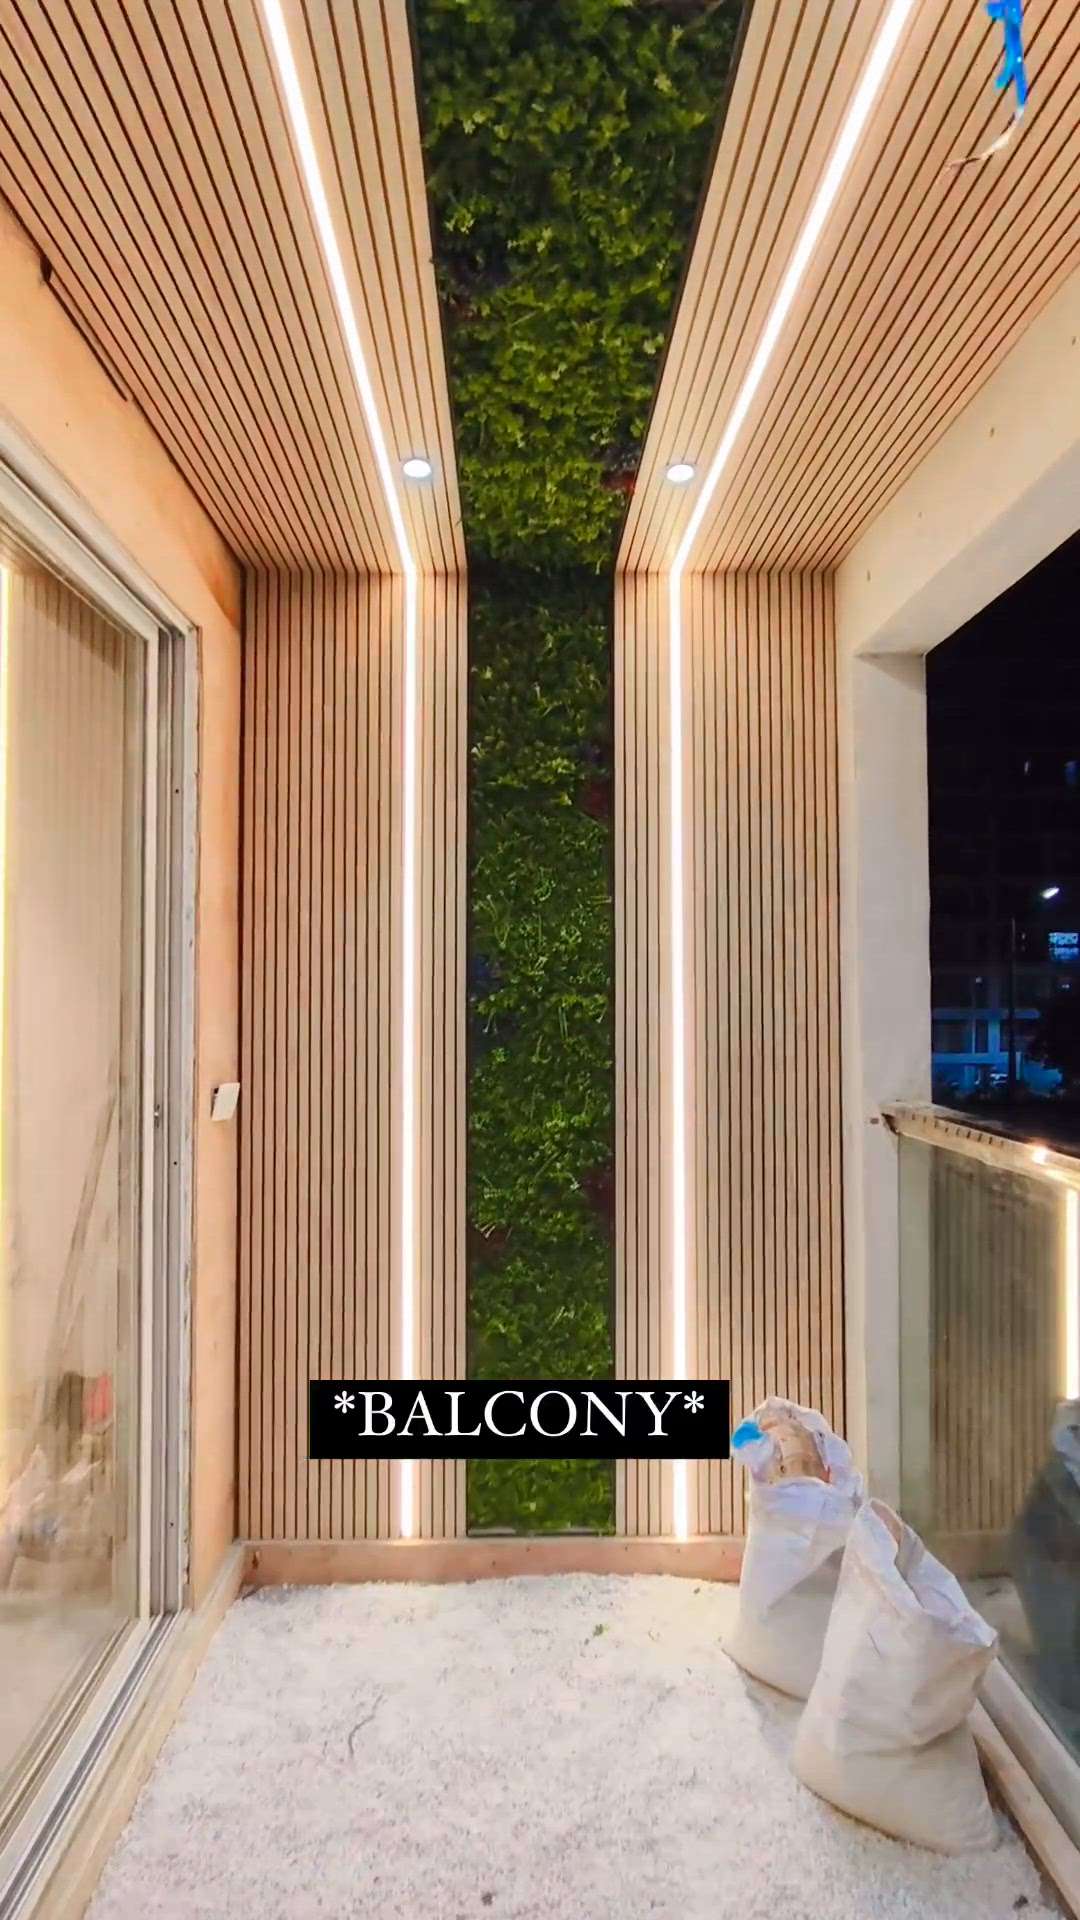 #WoodenBalcony  #BalconyGarden  #InteriorDesigner 
#Architect  #vishinterior  #HomeDecor  #